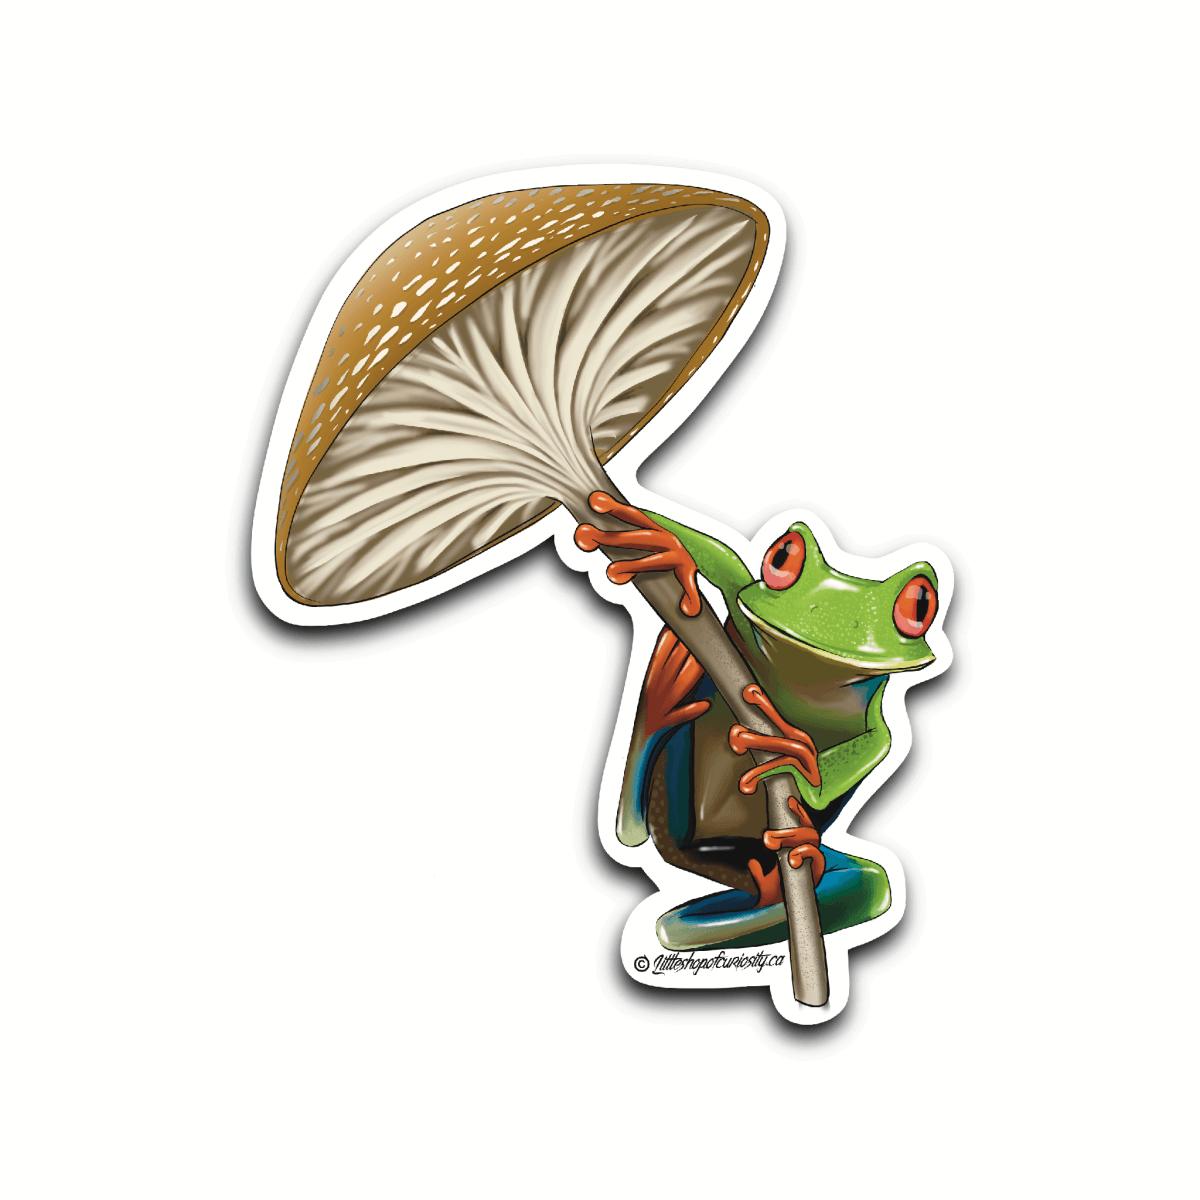 Red-eyed Tree Frog on Mushroom Sticker - Colour Sticker - Little Shop of Curiosity